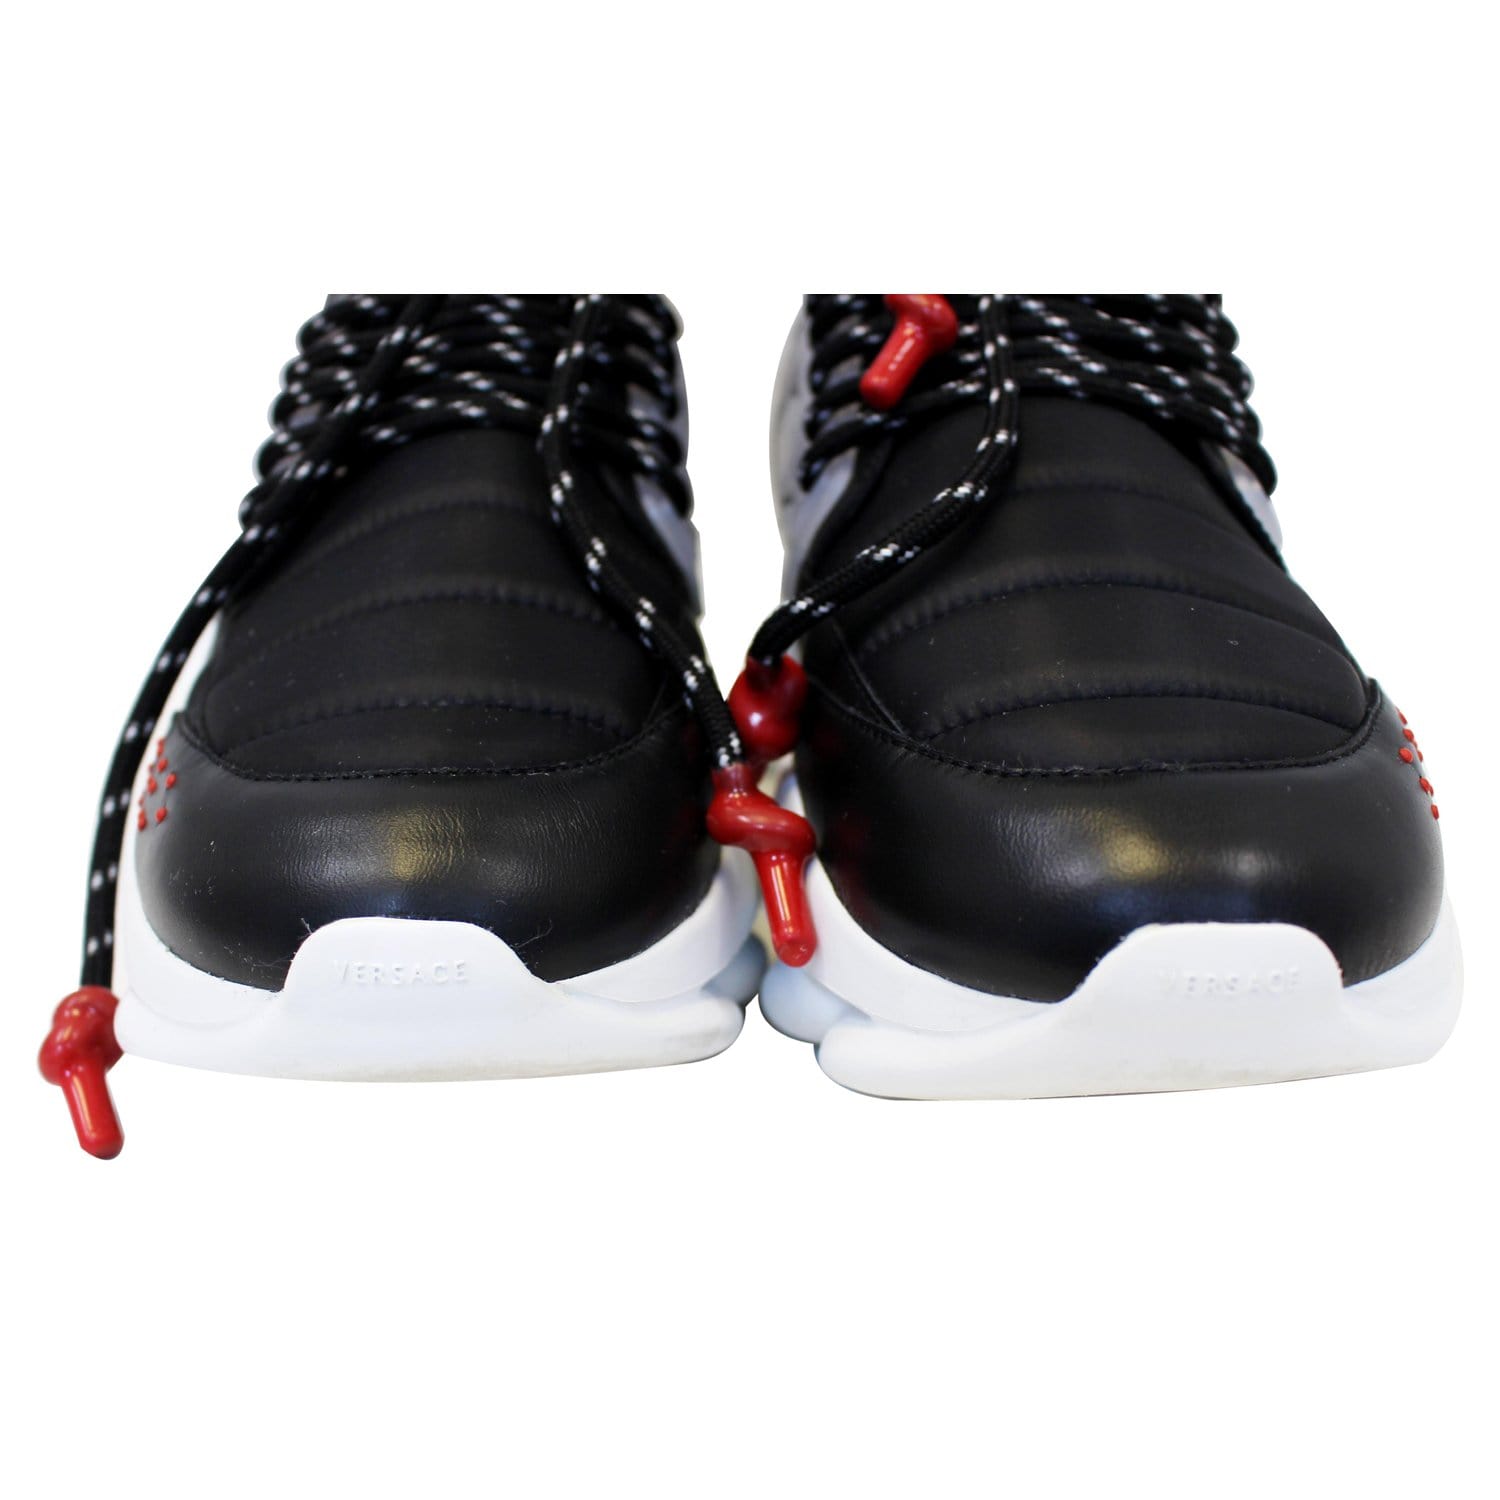 Versace Chain Reaction Sneaker Black & White